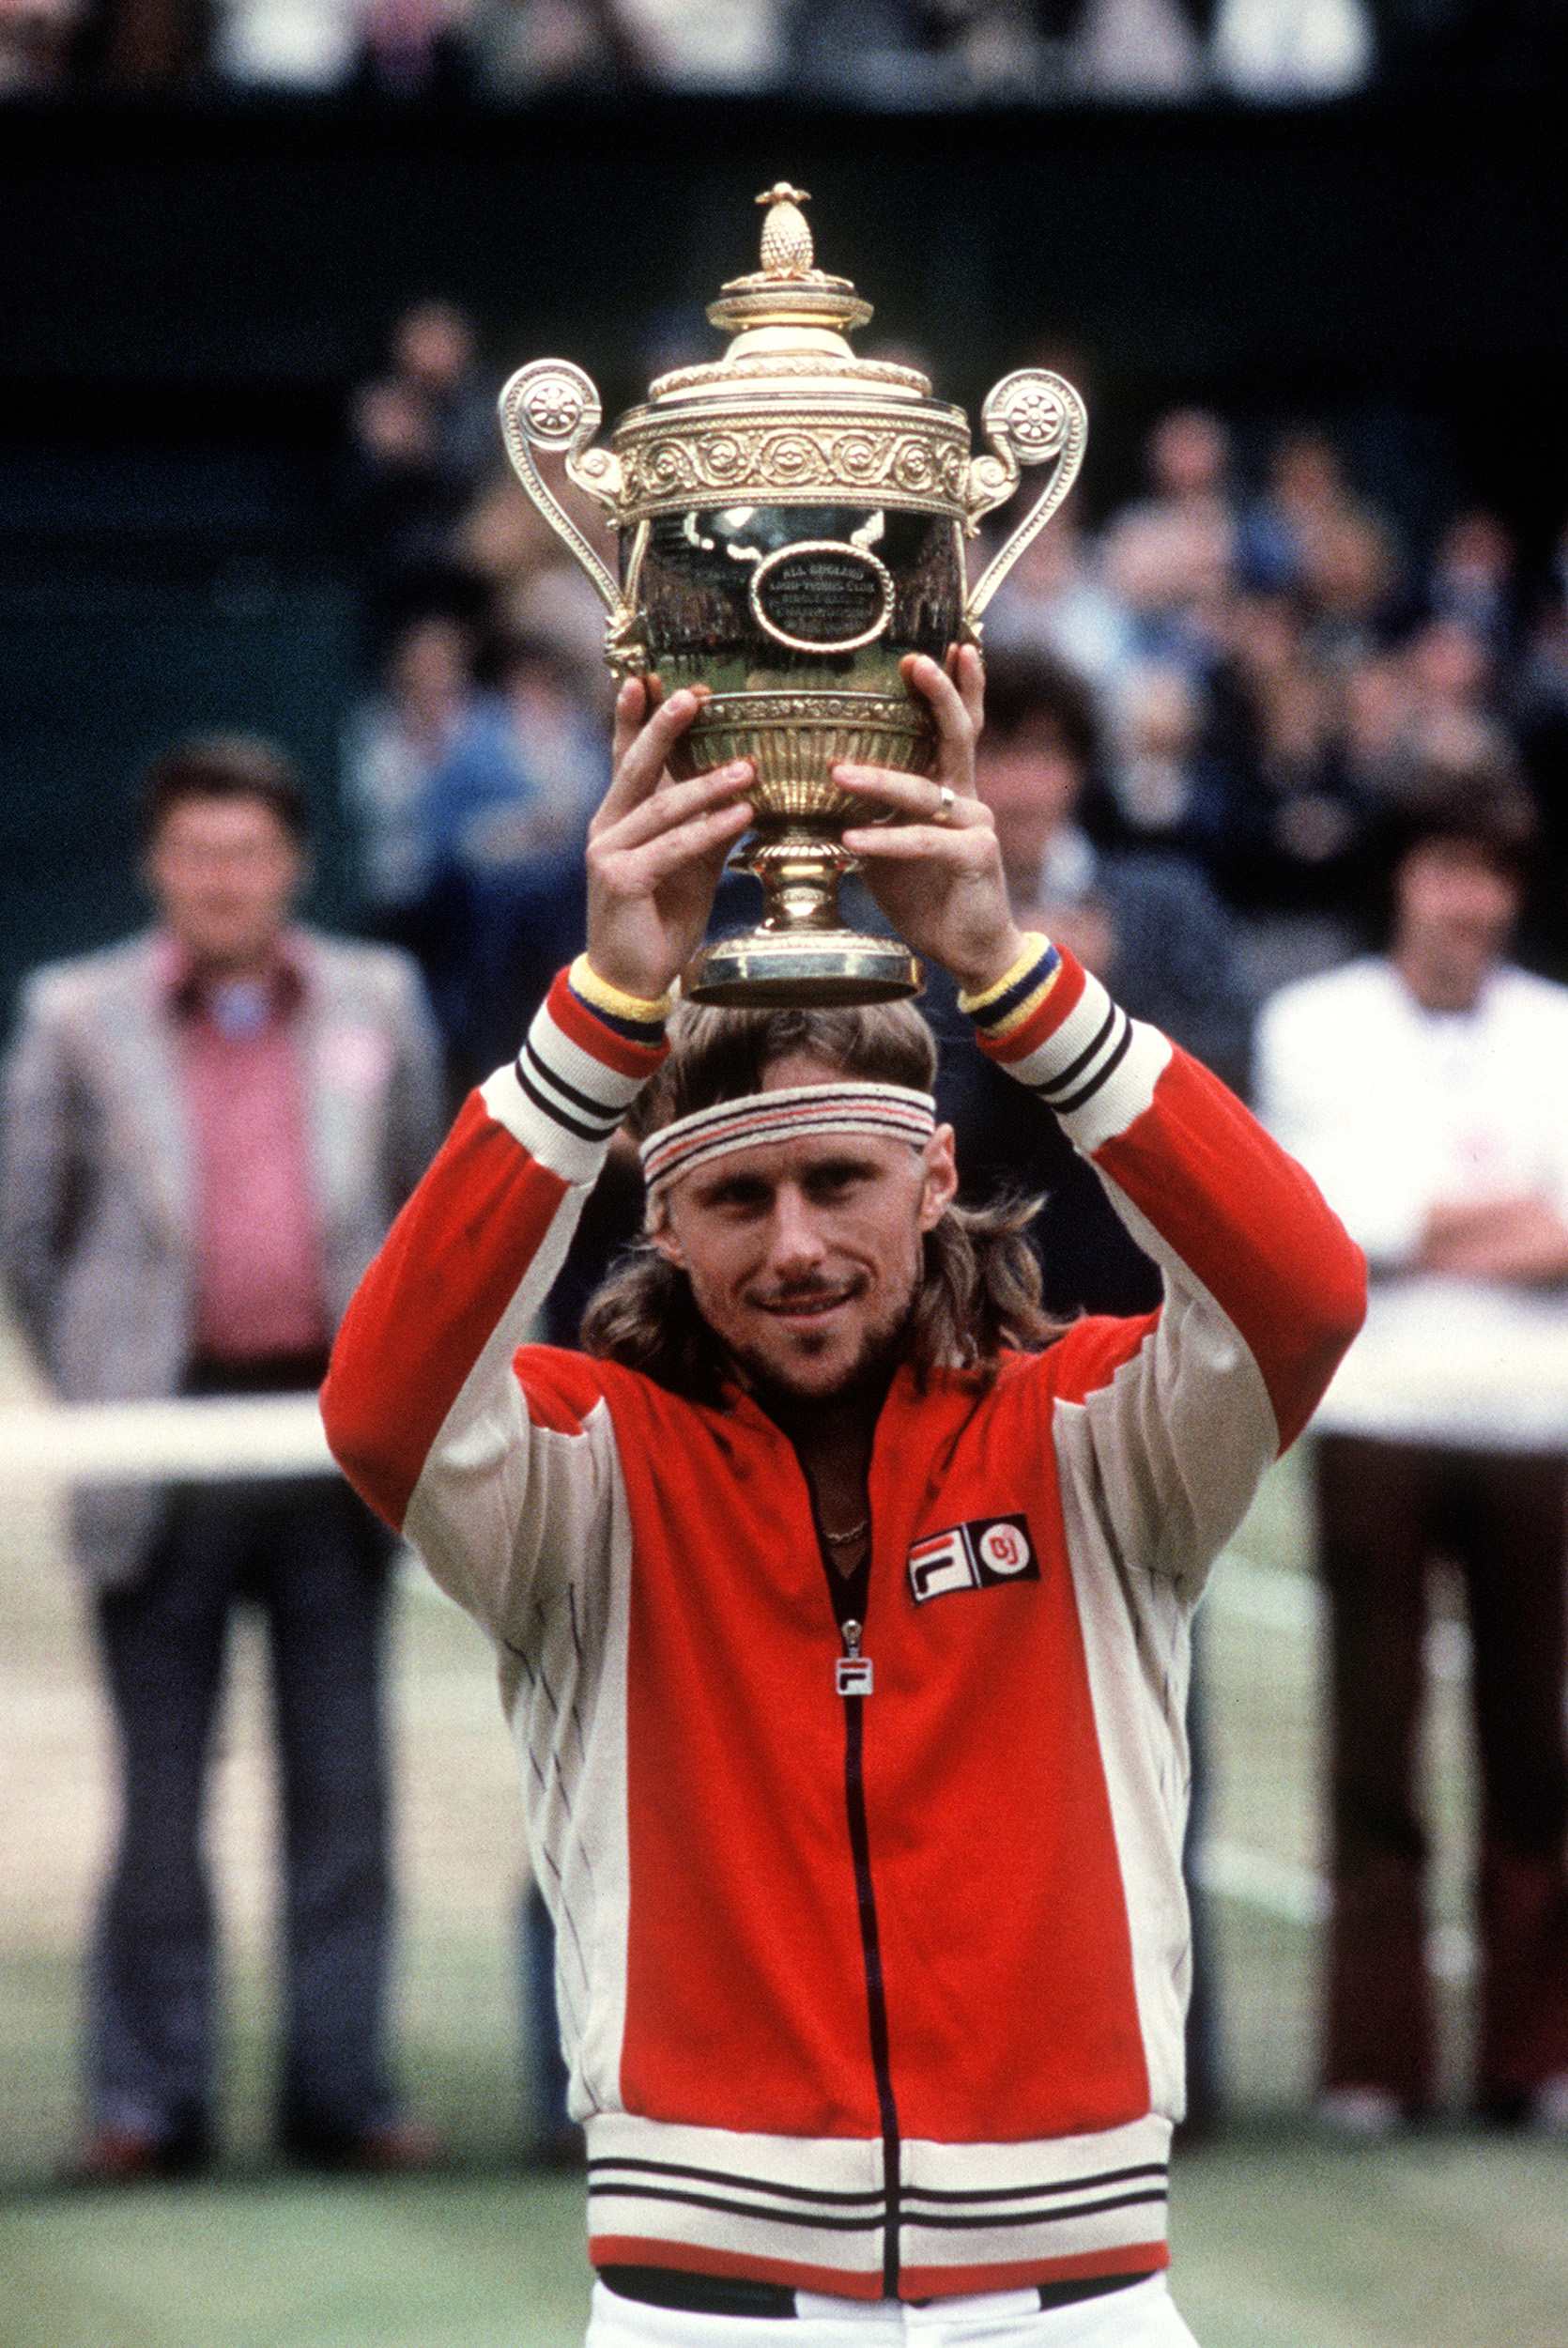 Bjorn Borg holding a trophy